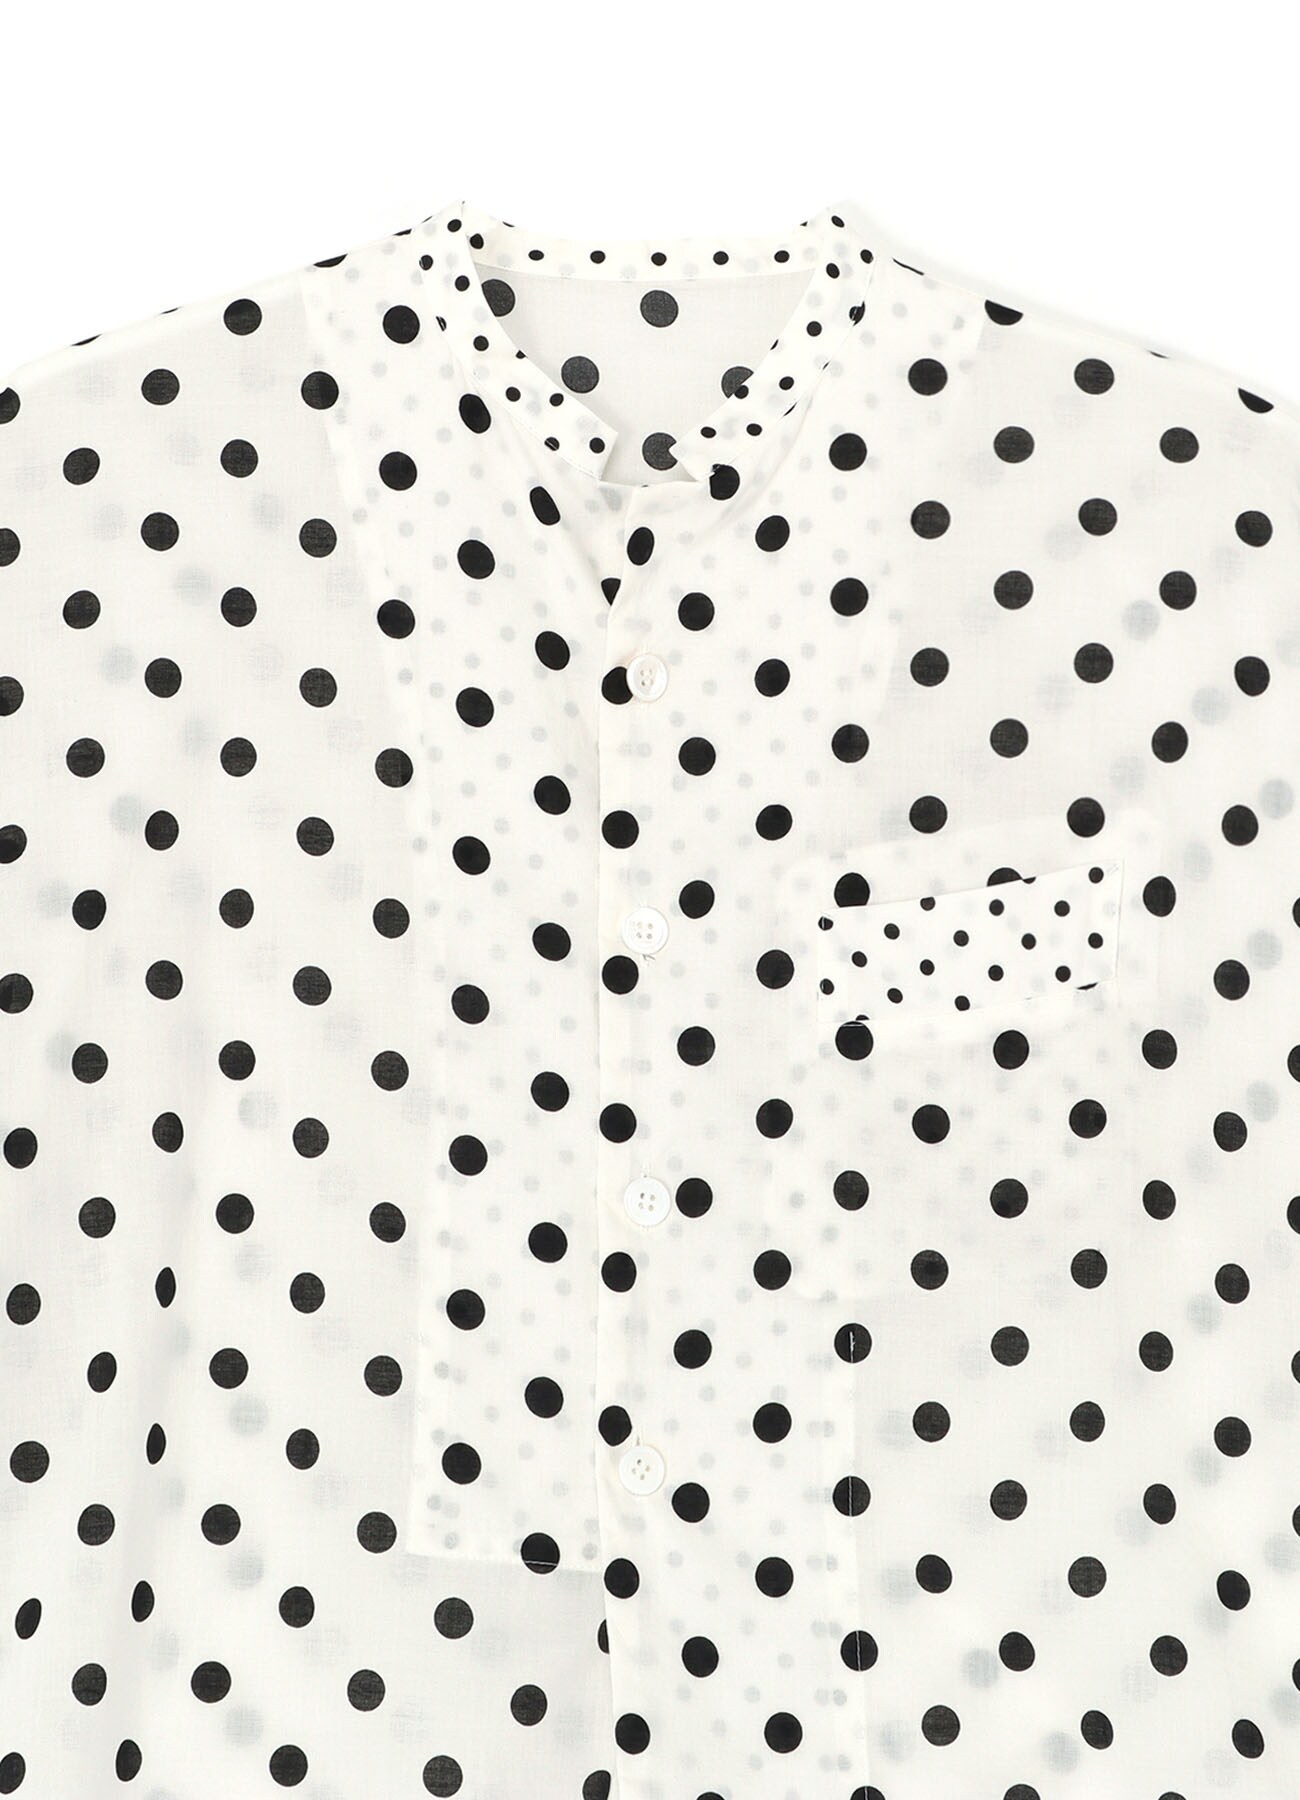 Black And White Polka Dot Printed Shirt